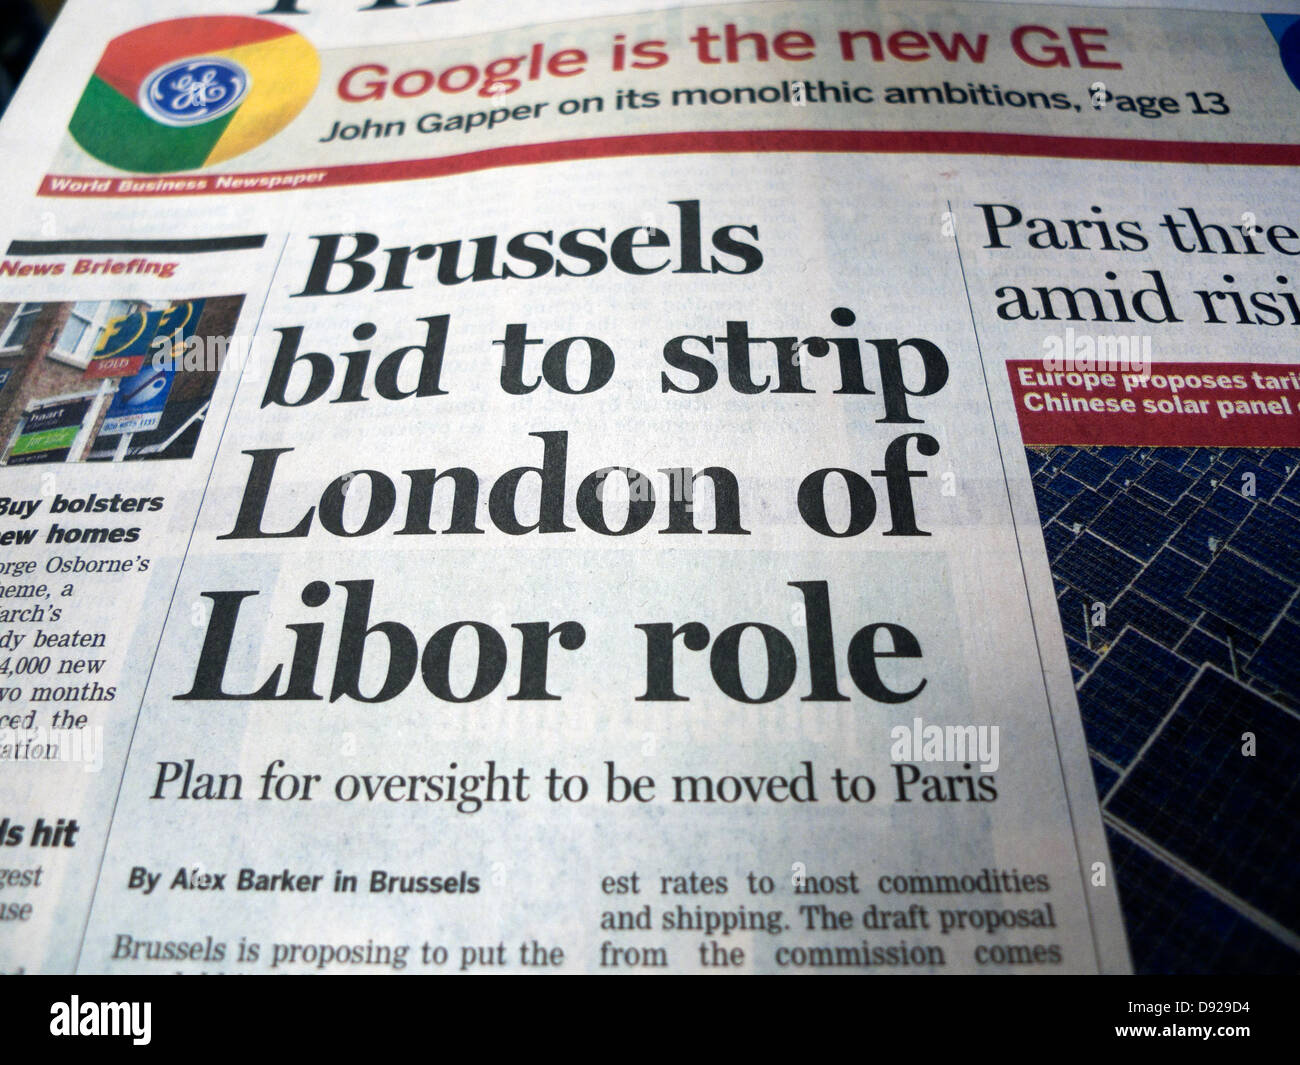 "Brüssel Gebot, Libor London Rolle Streifen" Libor Bankenskandal in Financial Times Zeitung titelt London England UK 6. Juni 2013 Stockfoto